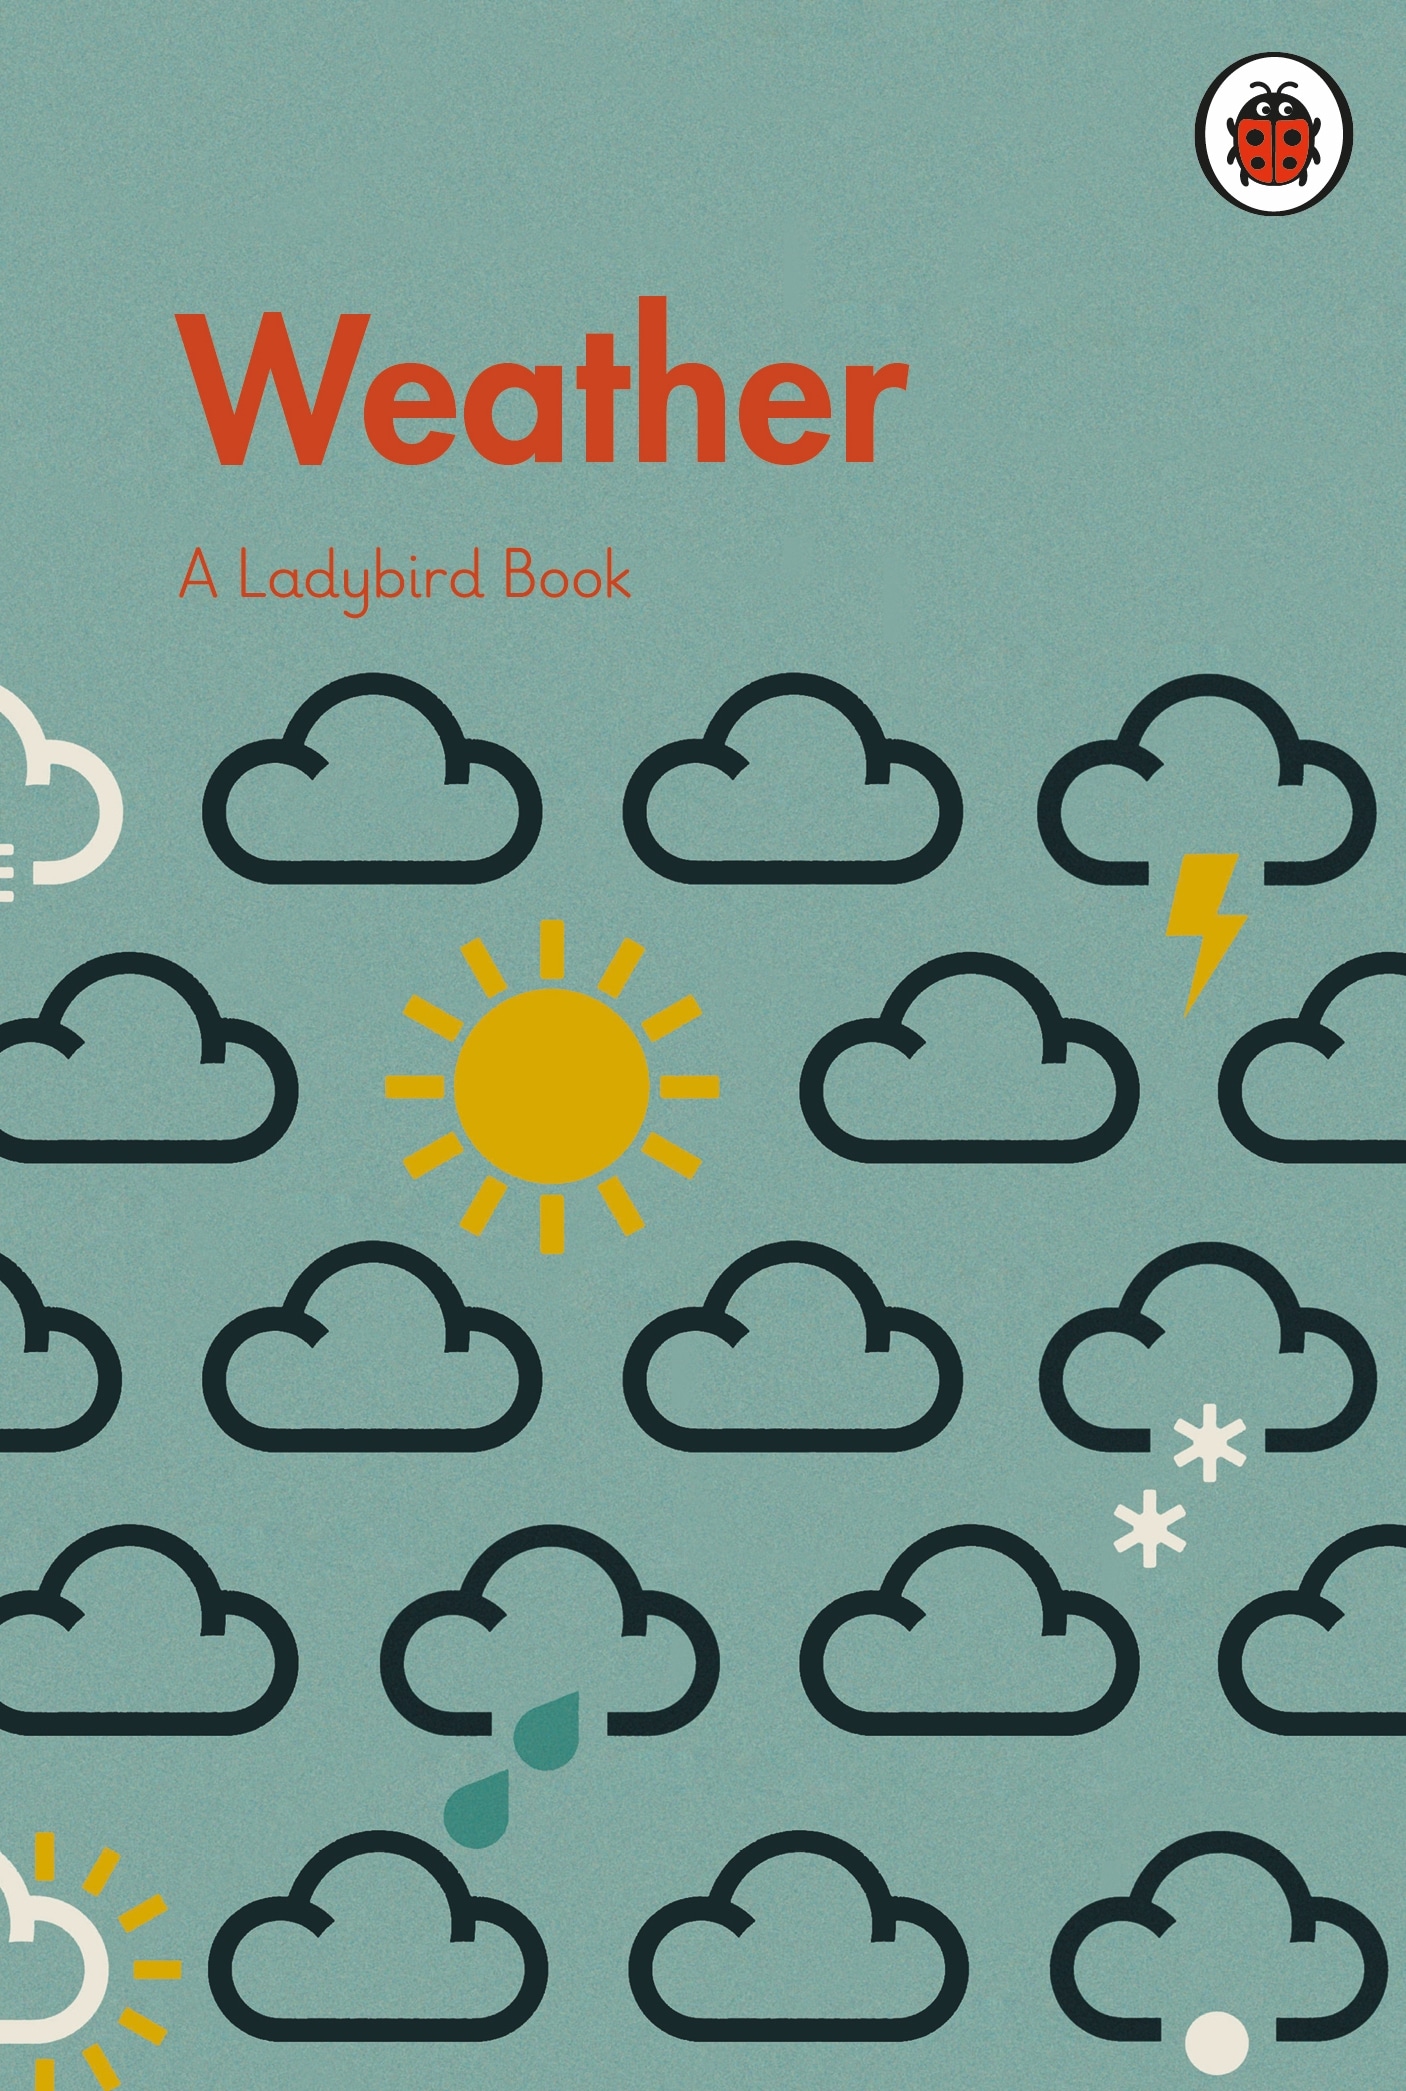 Book “A Ladybird Book: Weather” — August 5, 2021